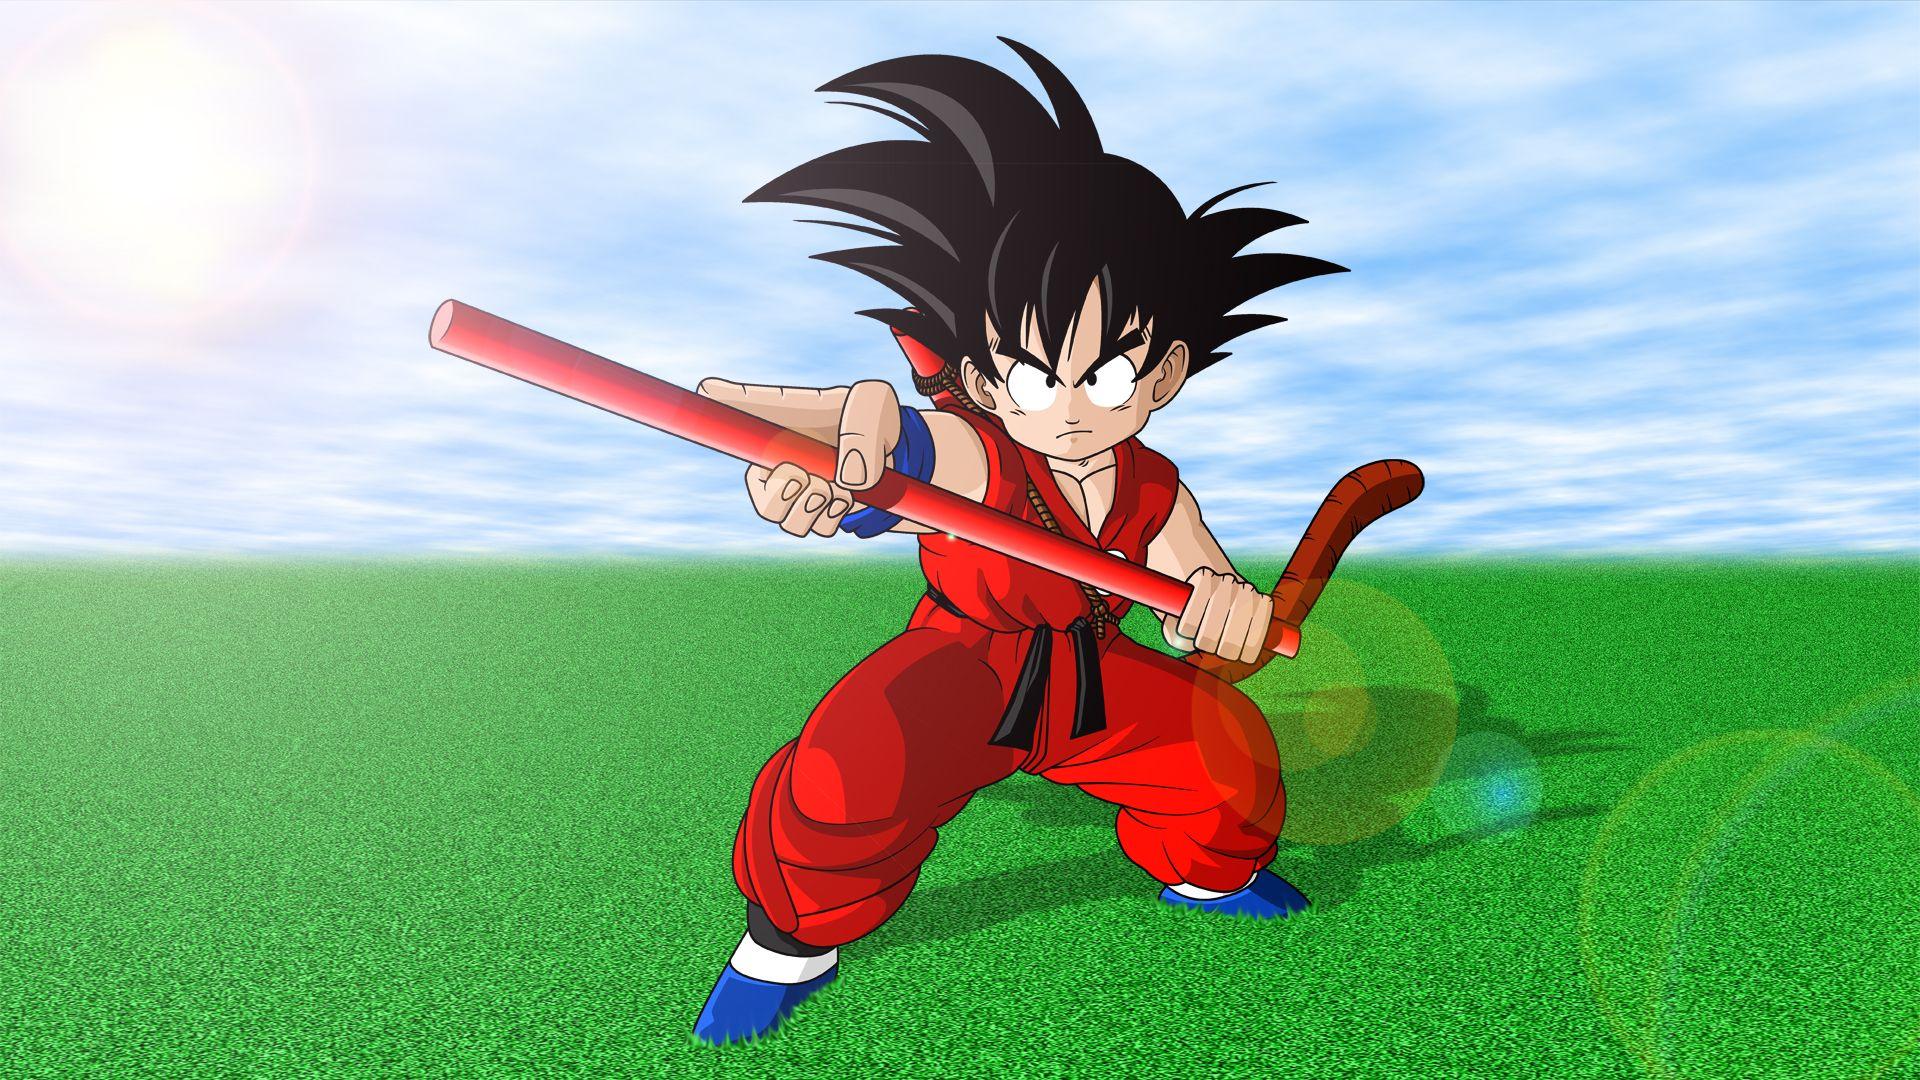 Best Goku Wallpaper HD for PC Dragon Ball Z. HD Wallpaper